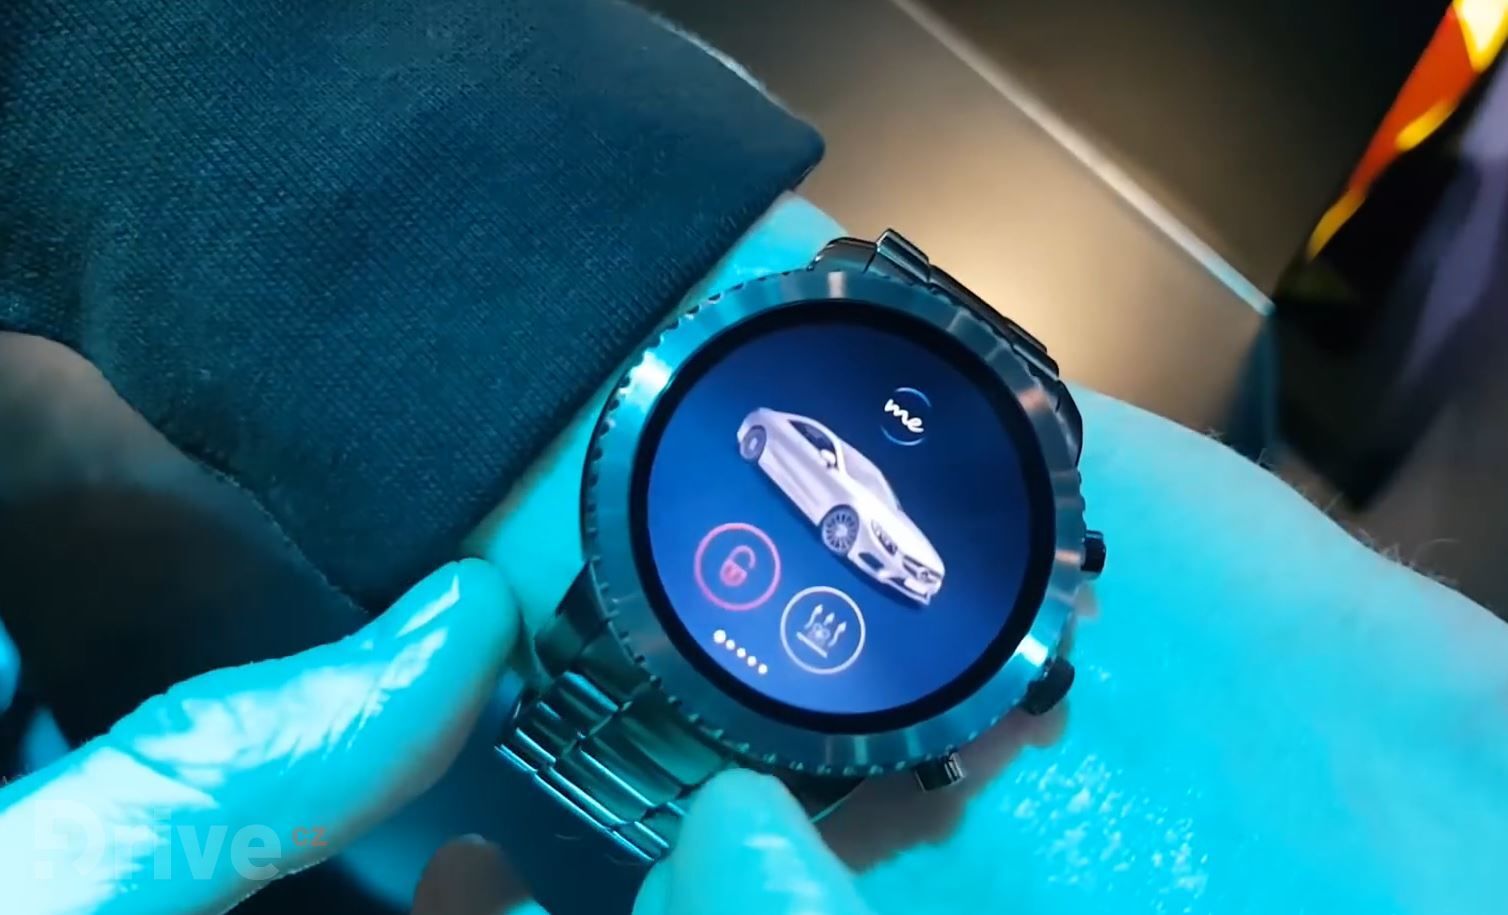 Aplikace Mercedes Me na hodinkách s Android Wear